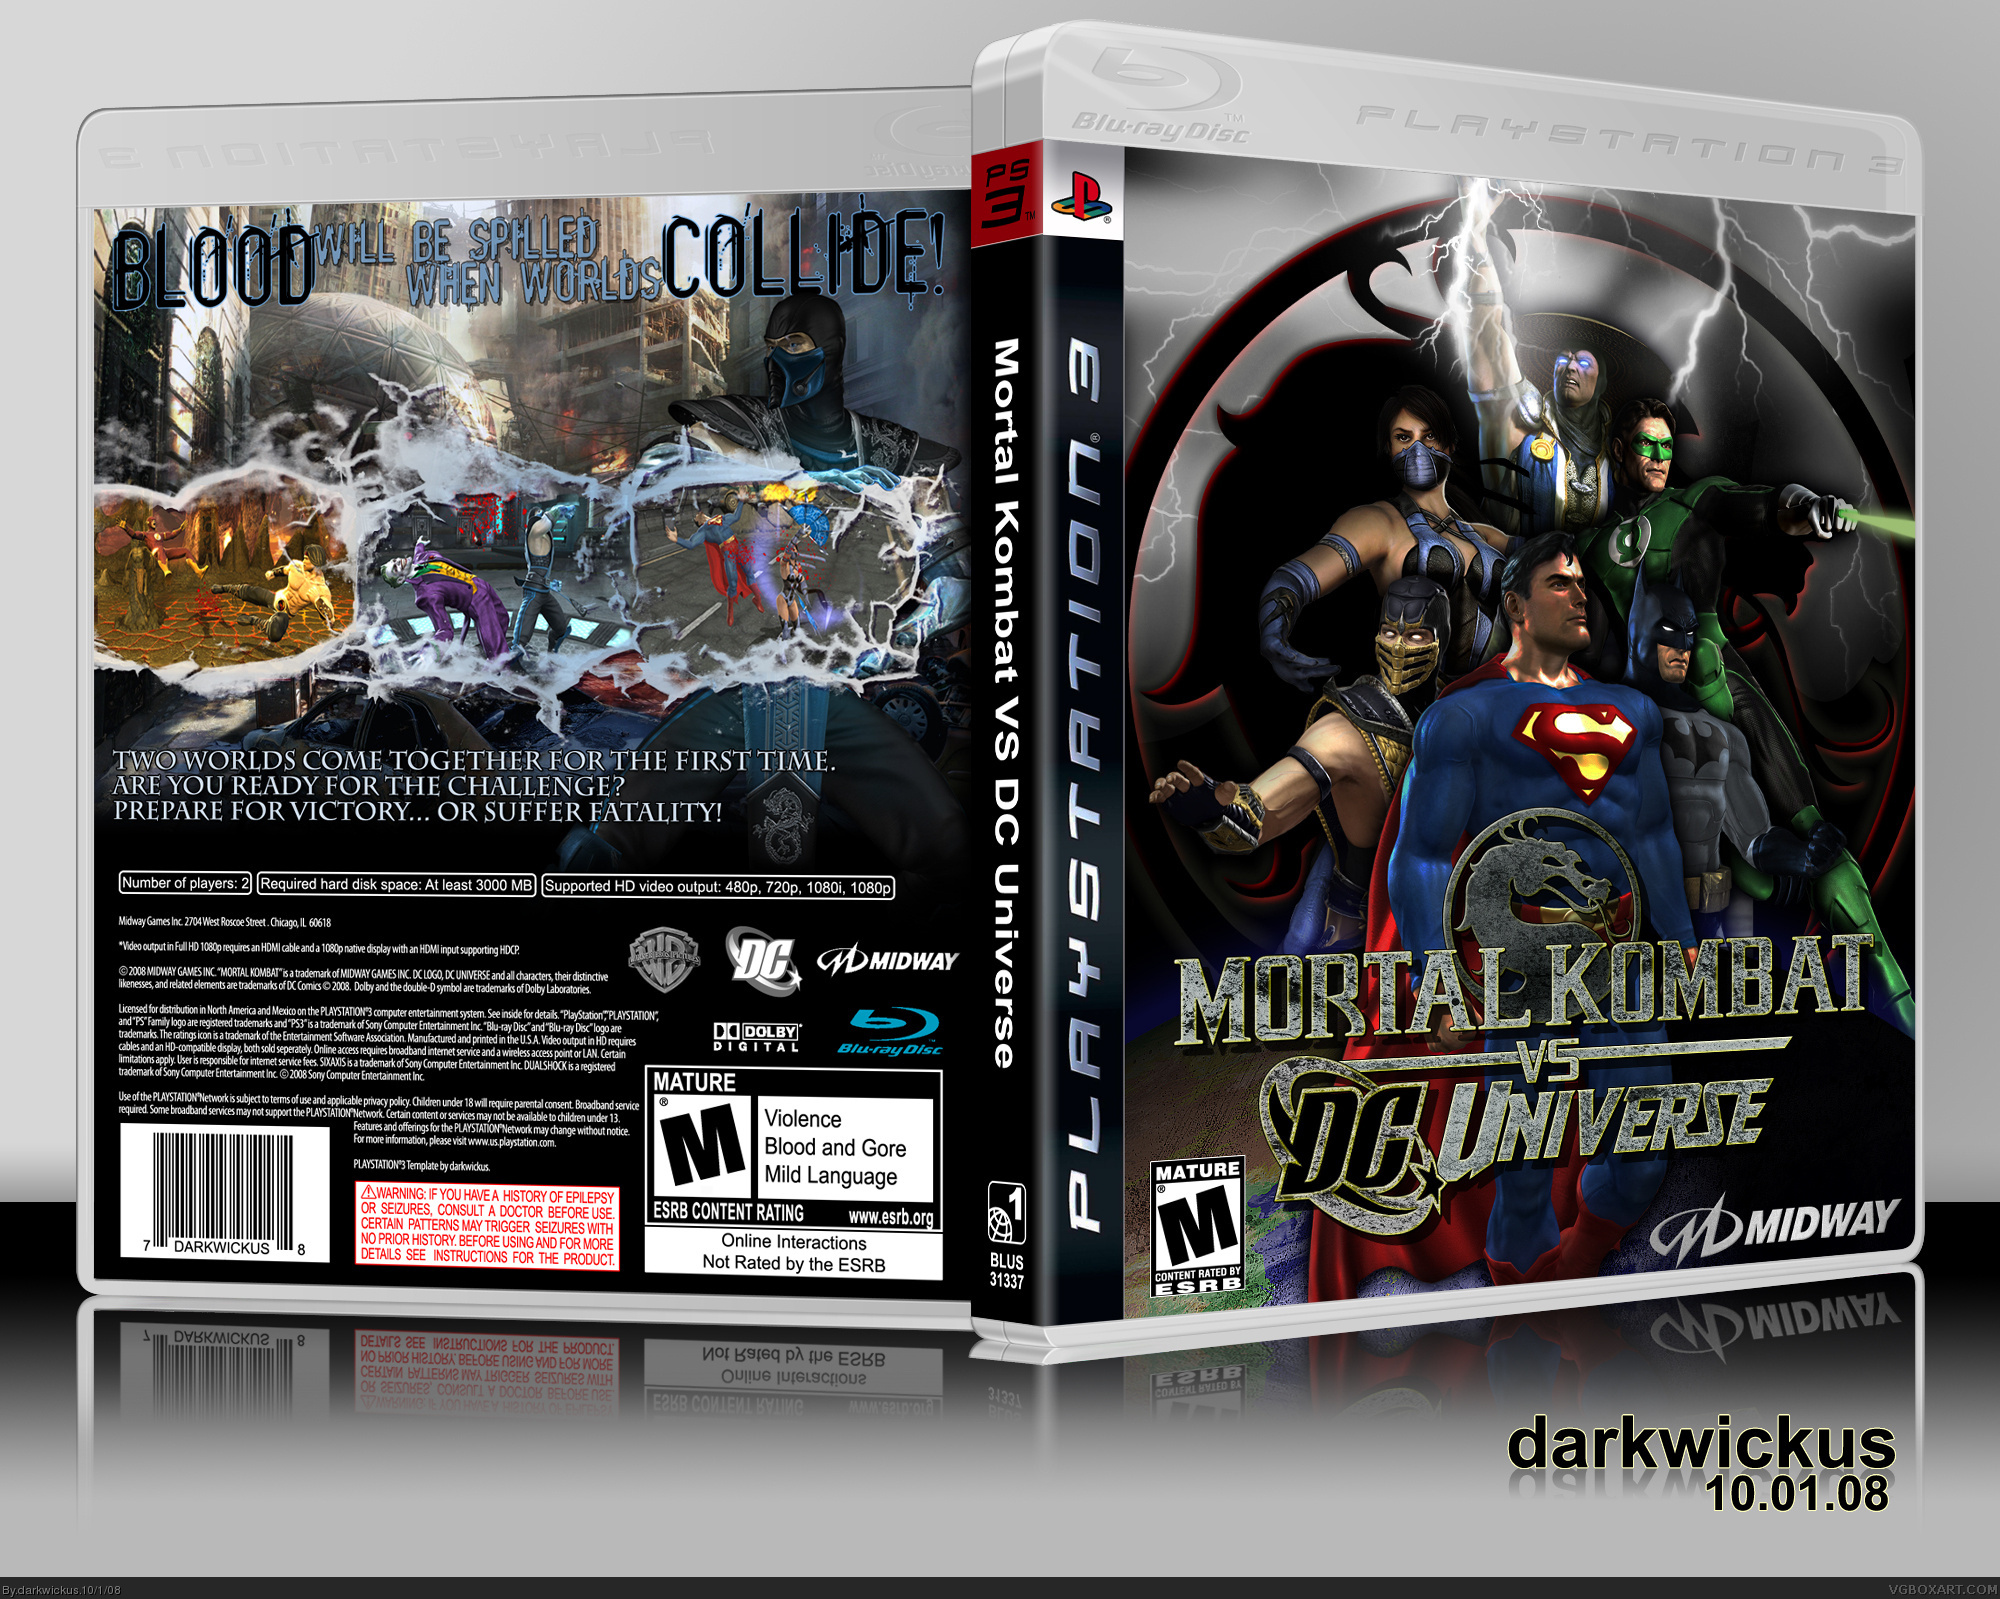 Genealogie infrastructuur historisch Mortal Kombat VS DC Universe 2008 (Xbox 360) (gamerip) (2008) MP3 -  Download Mortal Kombat VS DC Universe 2008 (Xbox 360) (gamerip) (2008)  Soundtracks for FREE!